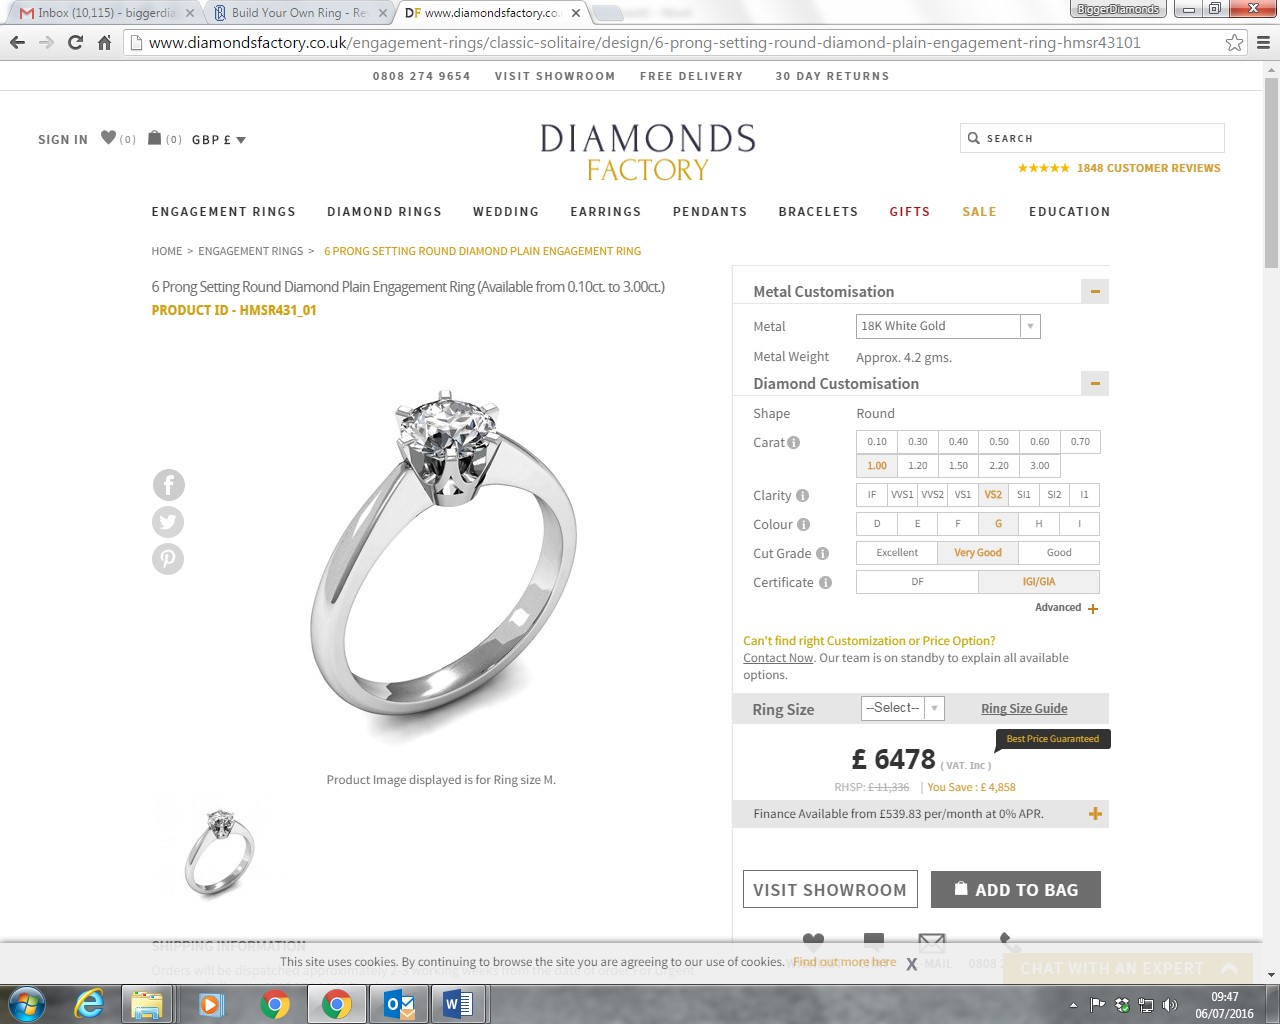 www.diamondsfactory.co.uk £6428.00